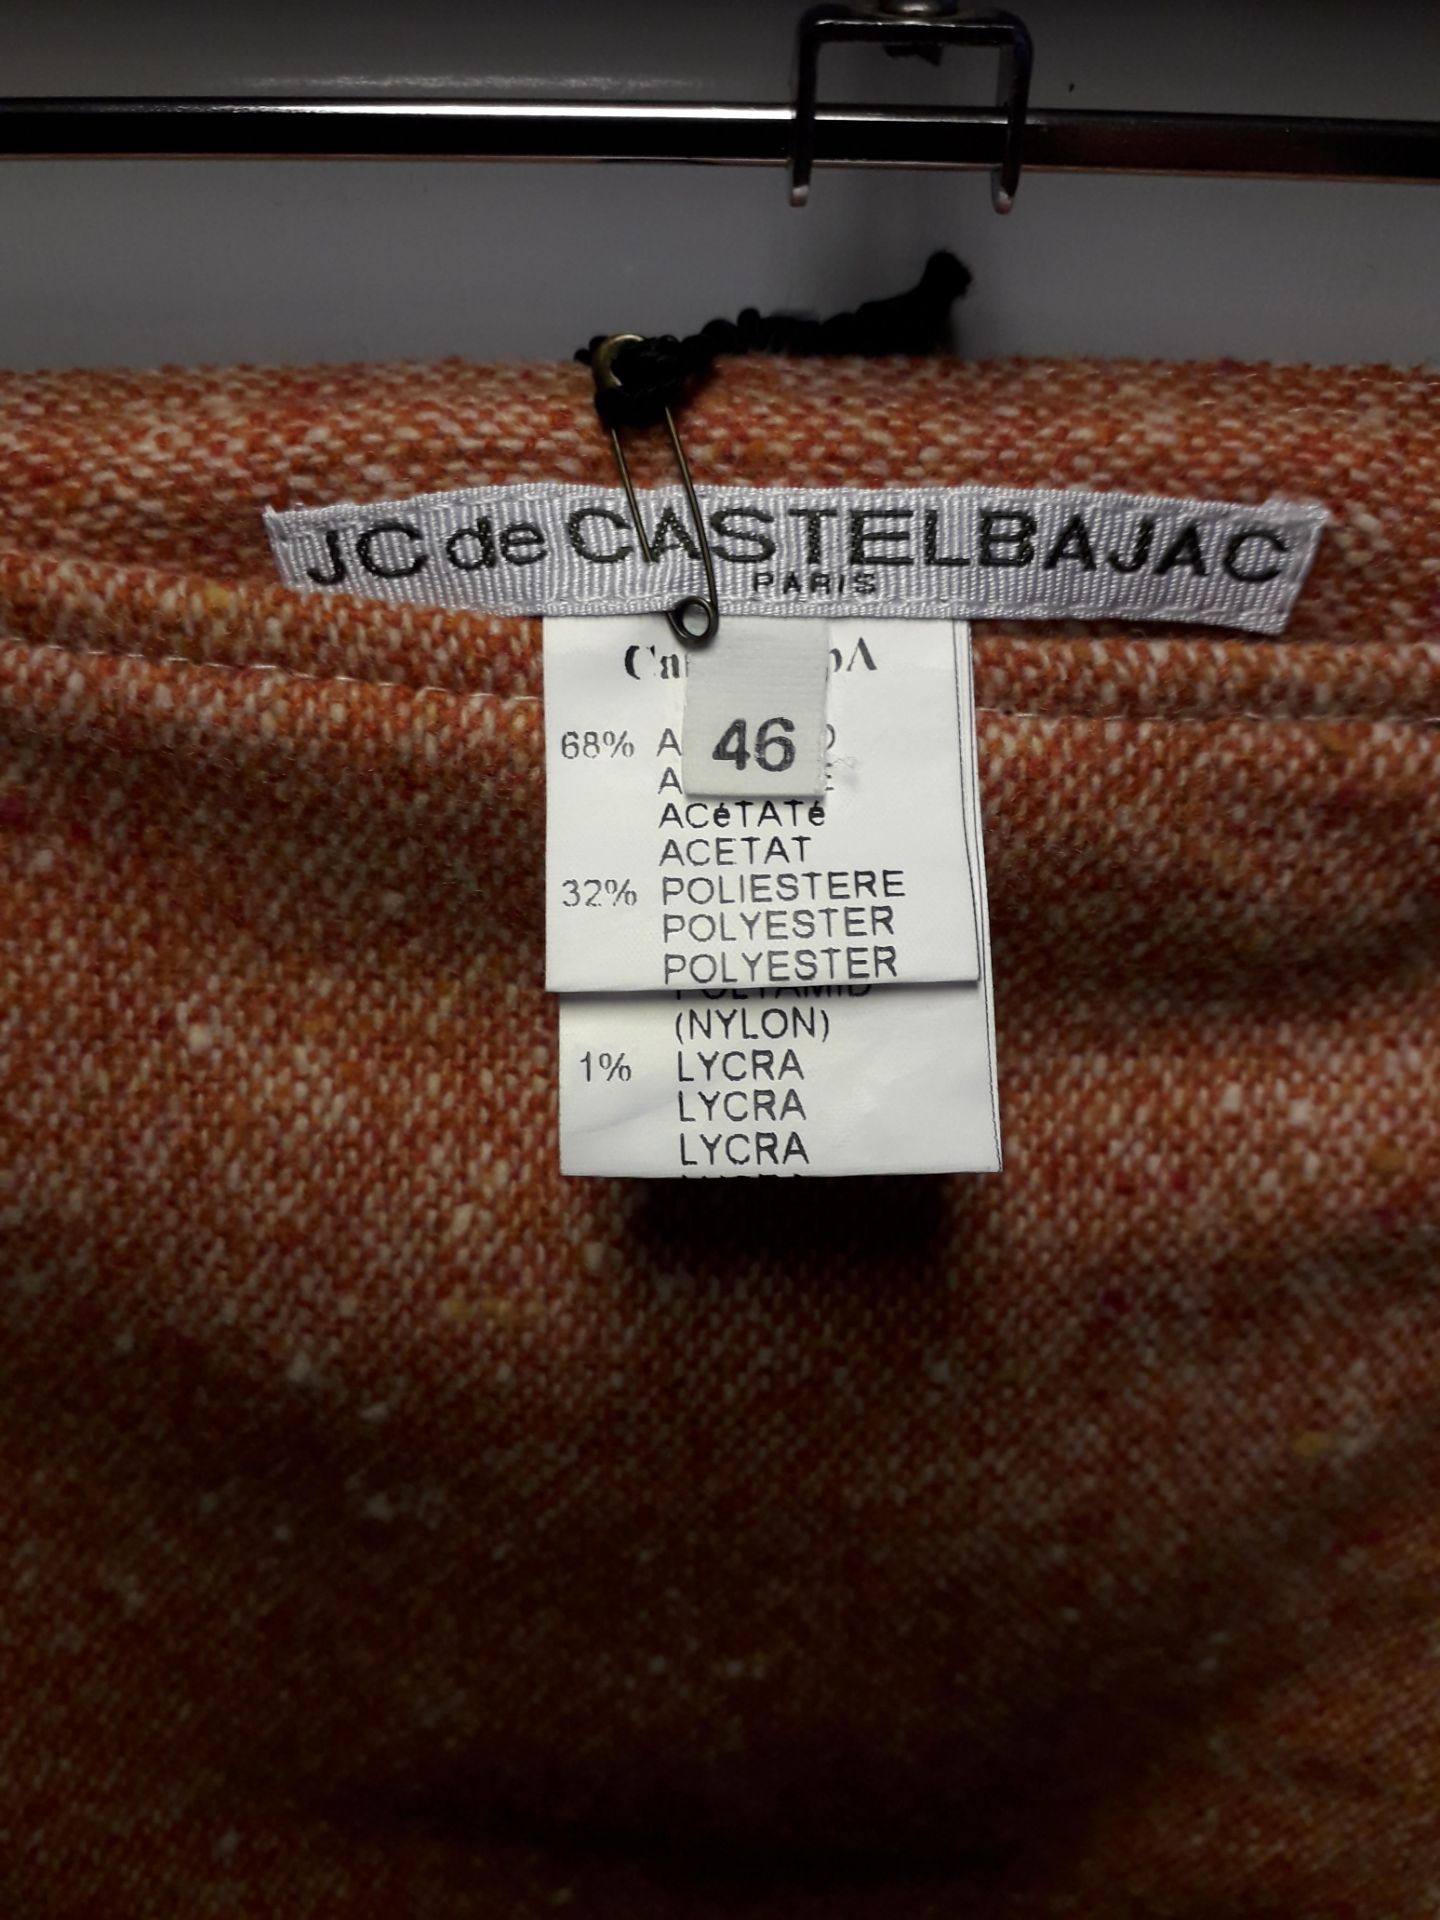 1 x Jc De Castlebajac Paris Tangerine Zipped Pencil Skirt - Size: 46 - Material: Lining 68% Acetate, - Image 3 of 5